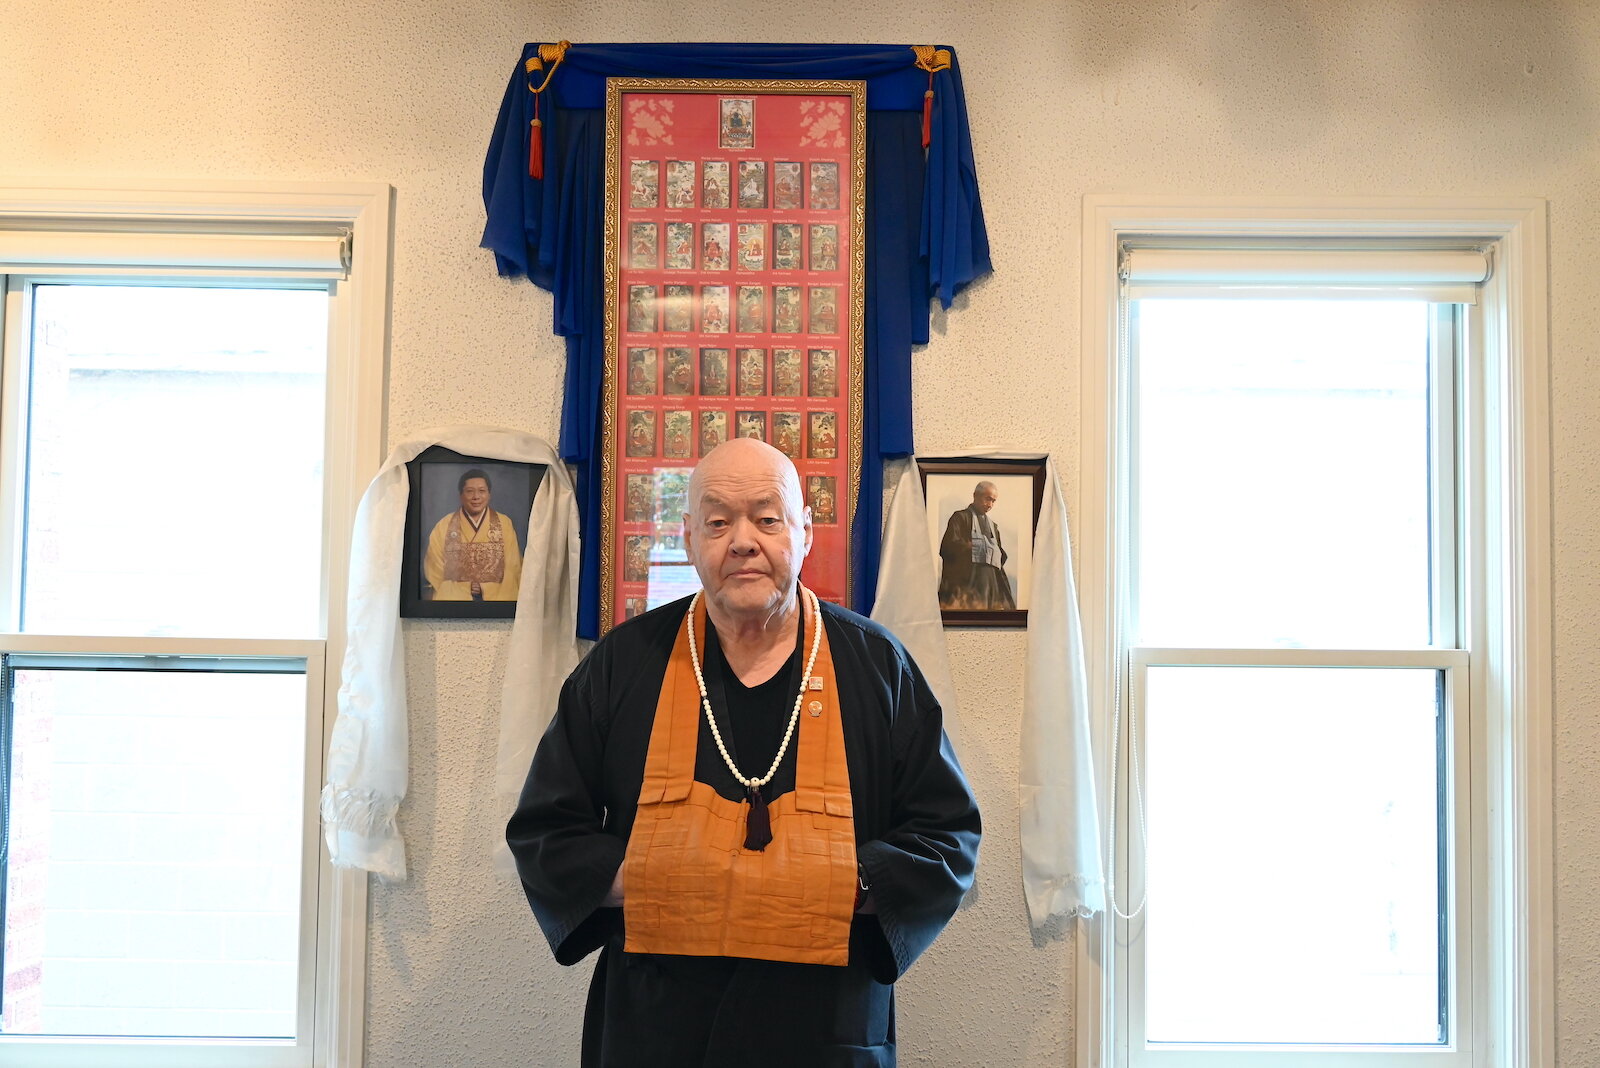 Sokuzan, founding abbot of SokukoJi Buddhist Temple Monastery, stands in front of photos of his teachers, Chögyam Trungpa Rinpoche, left, and Kōbun Chino Otogawa Roshi.